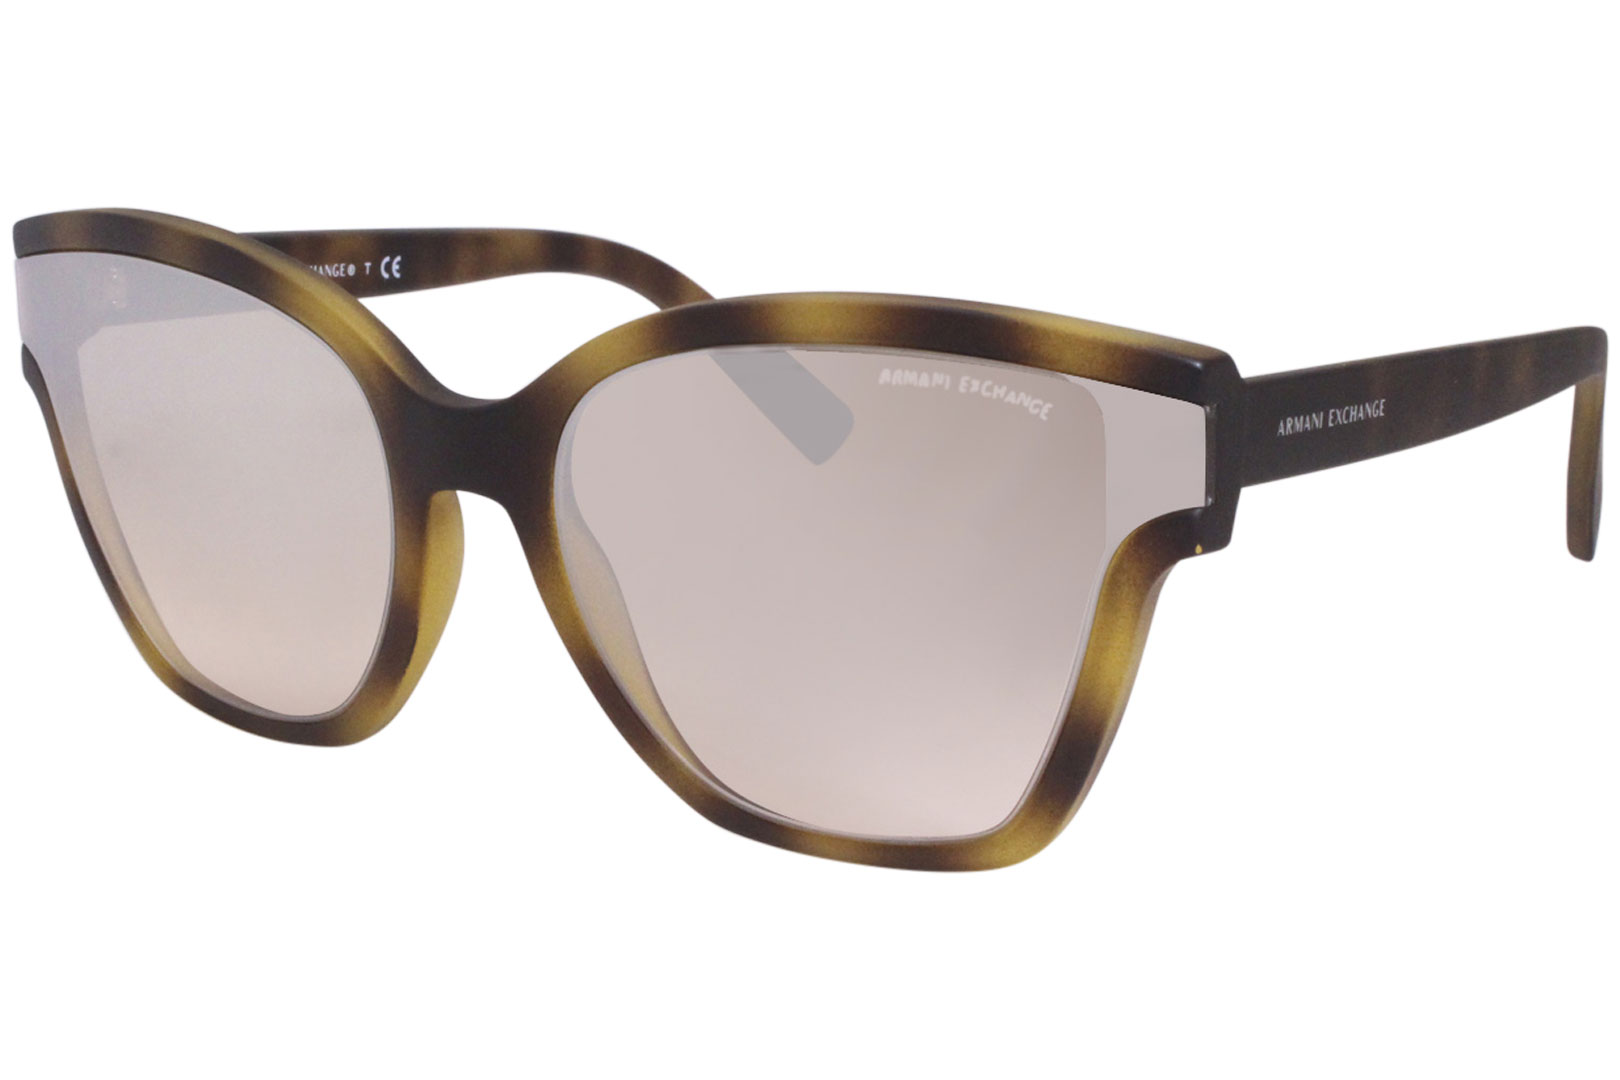 Armani Exchange AX4073S Sunglasses Women's Fashion Square Shades ...